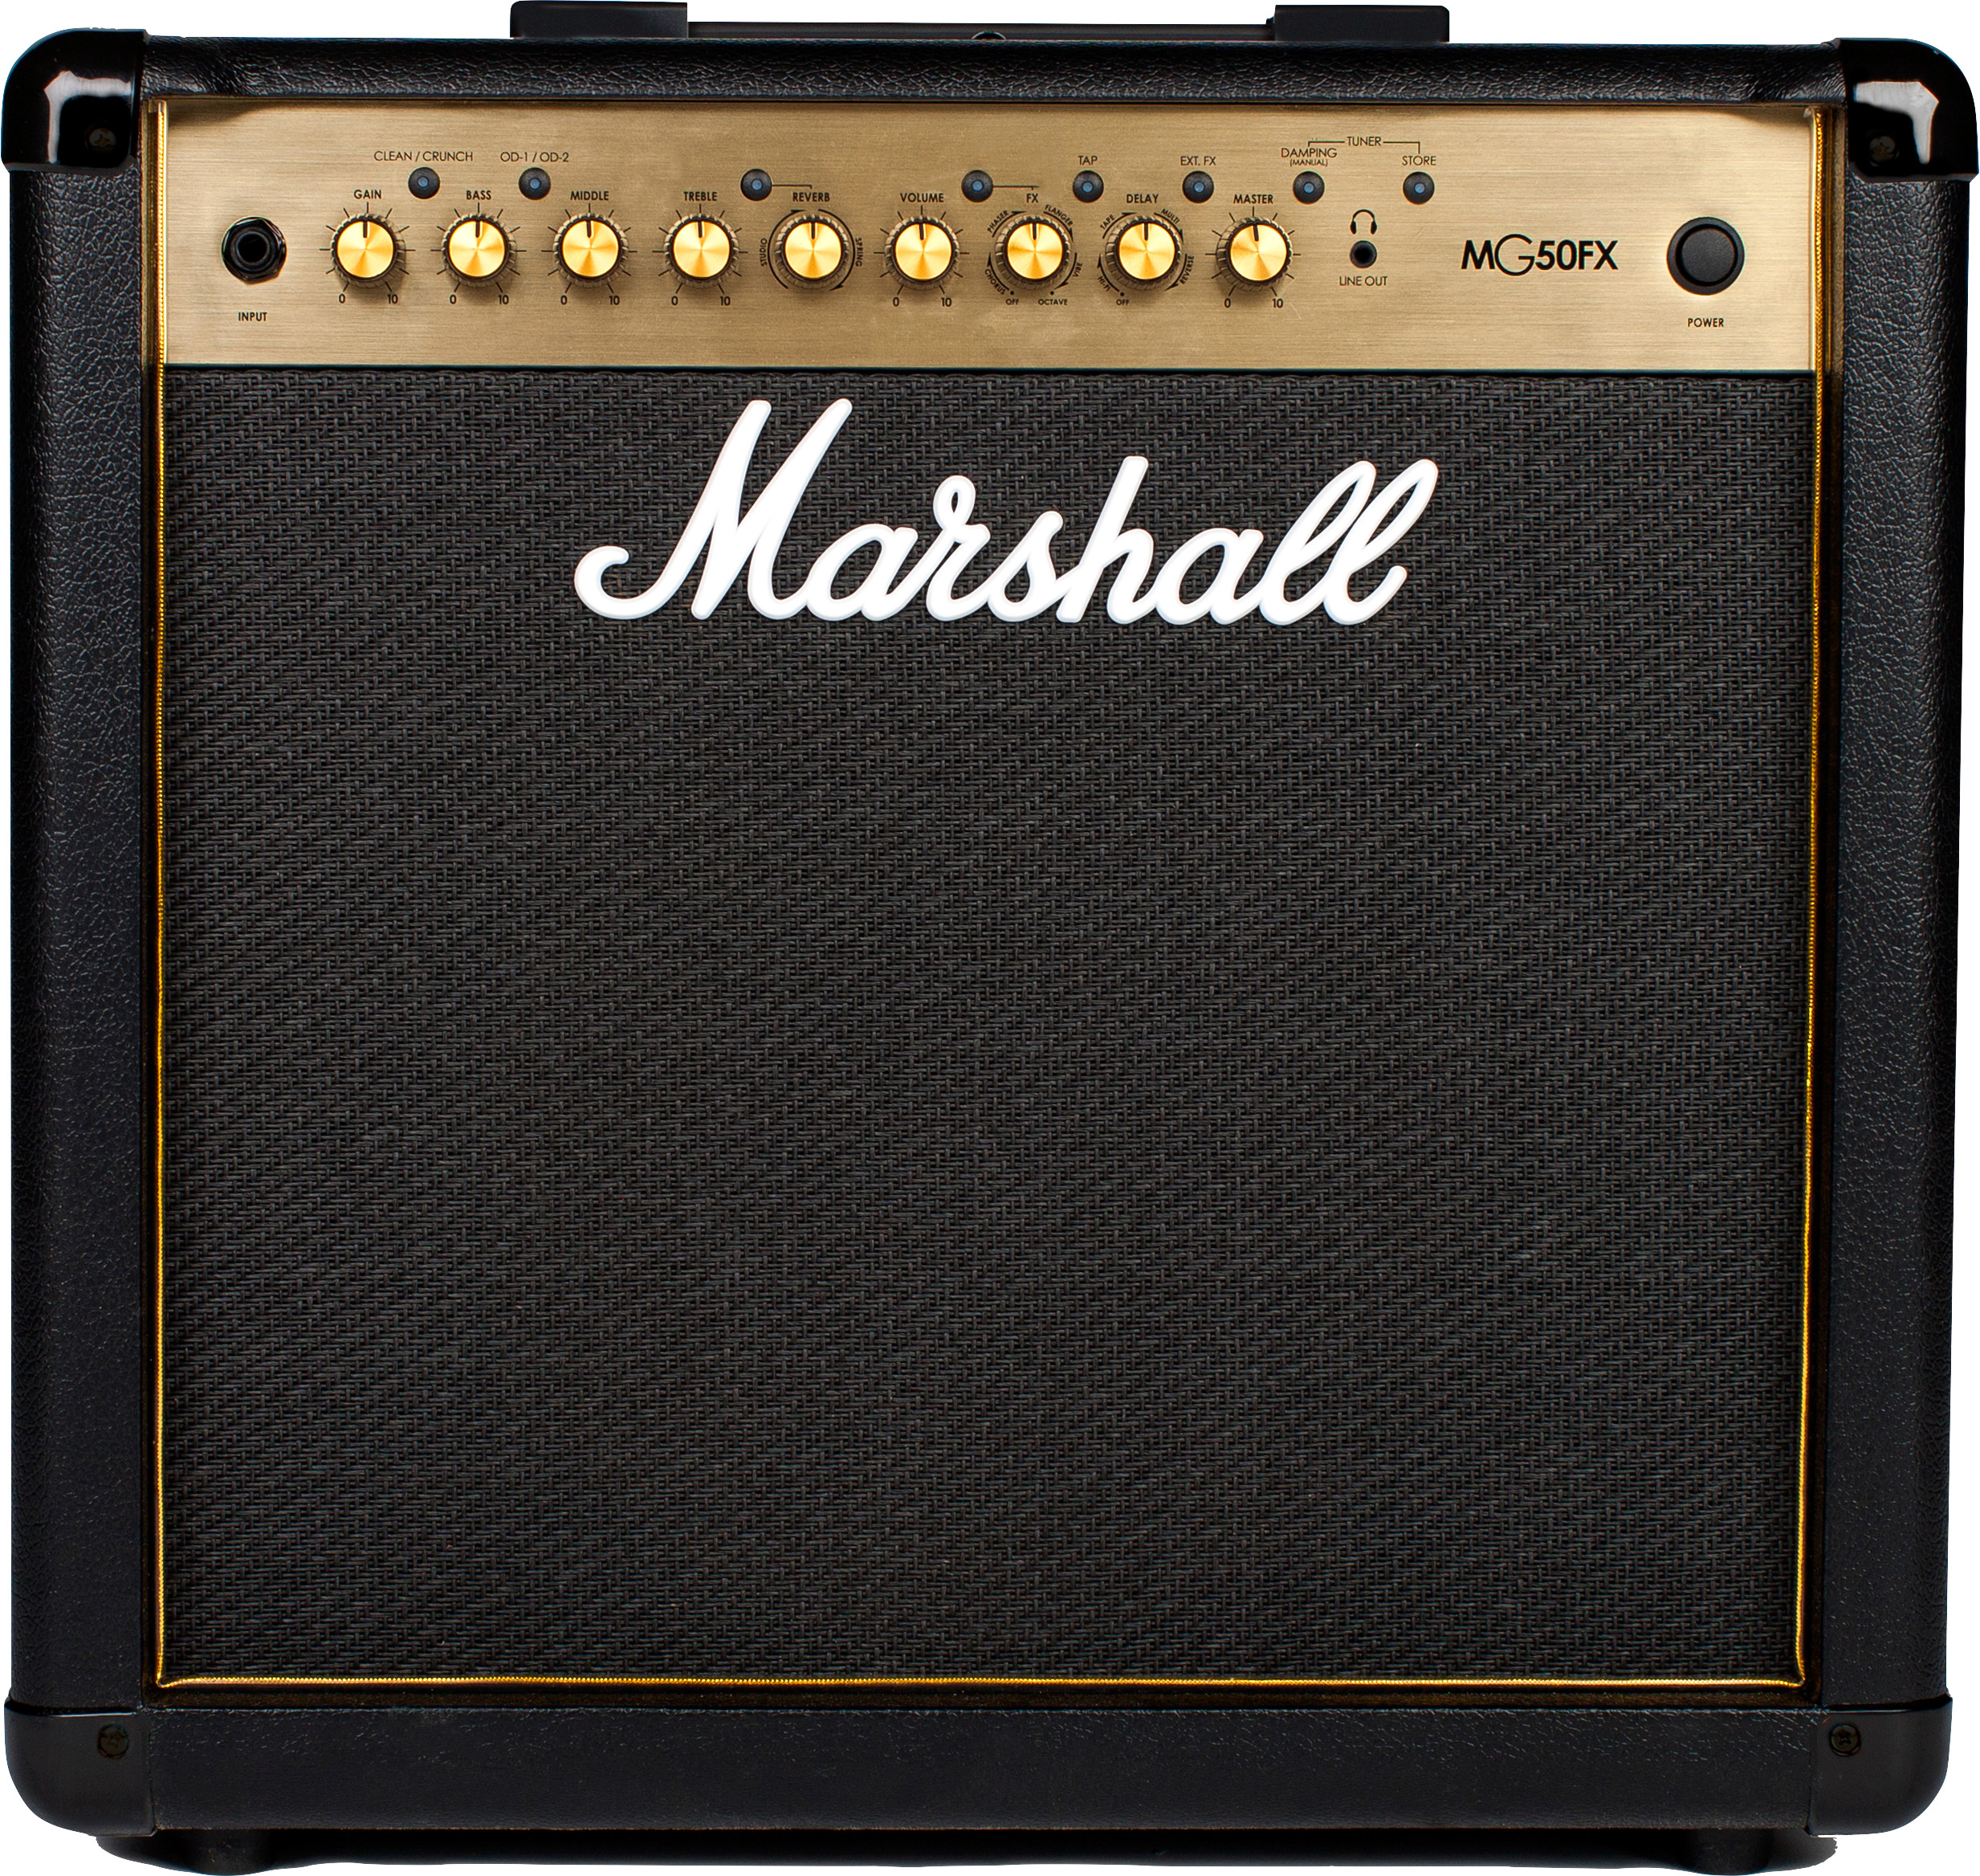 Marshall Mg50gfx Gold Combo 50 W - Ampli Guitare Électrique Combo - Variation 1